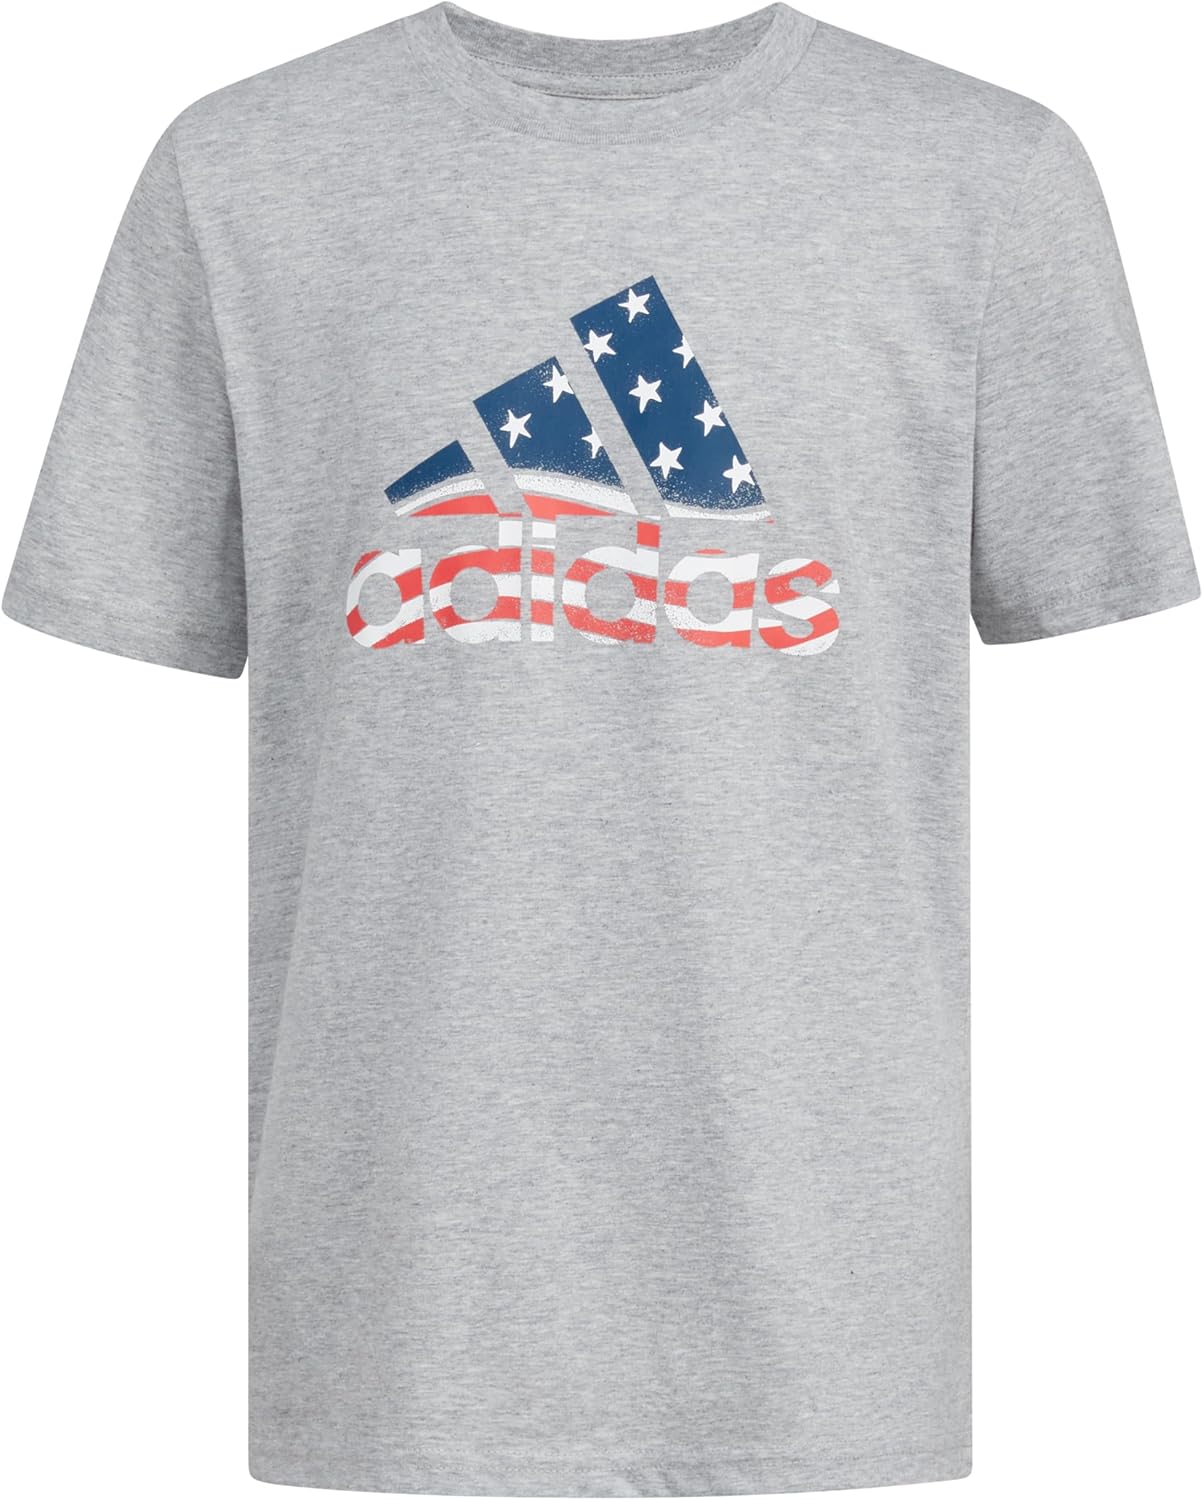 adidas Boys’ Short Sleeve Cotton USA Graphic T-Shirt